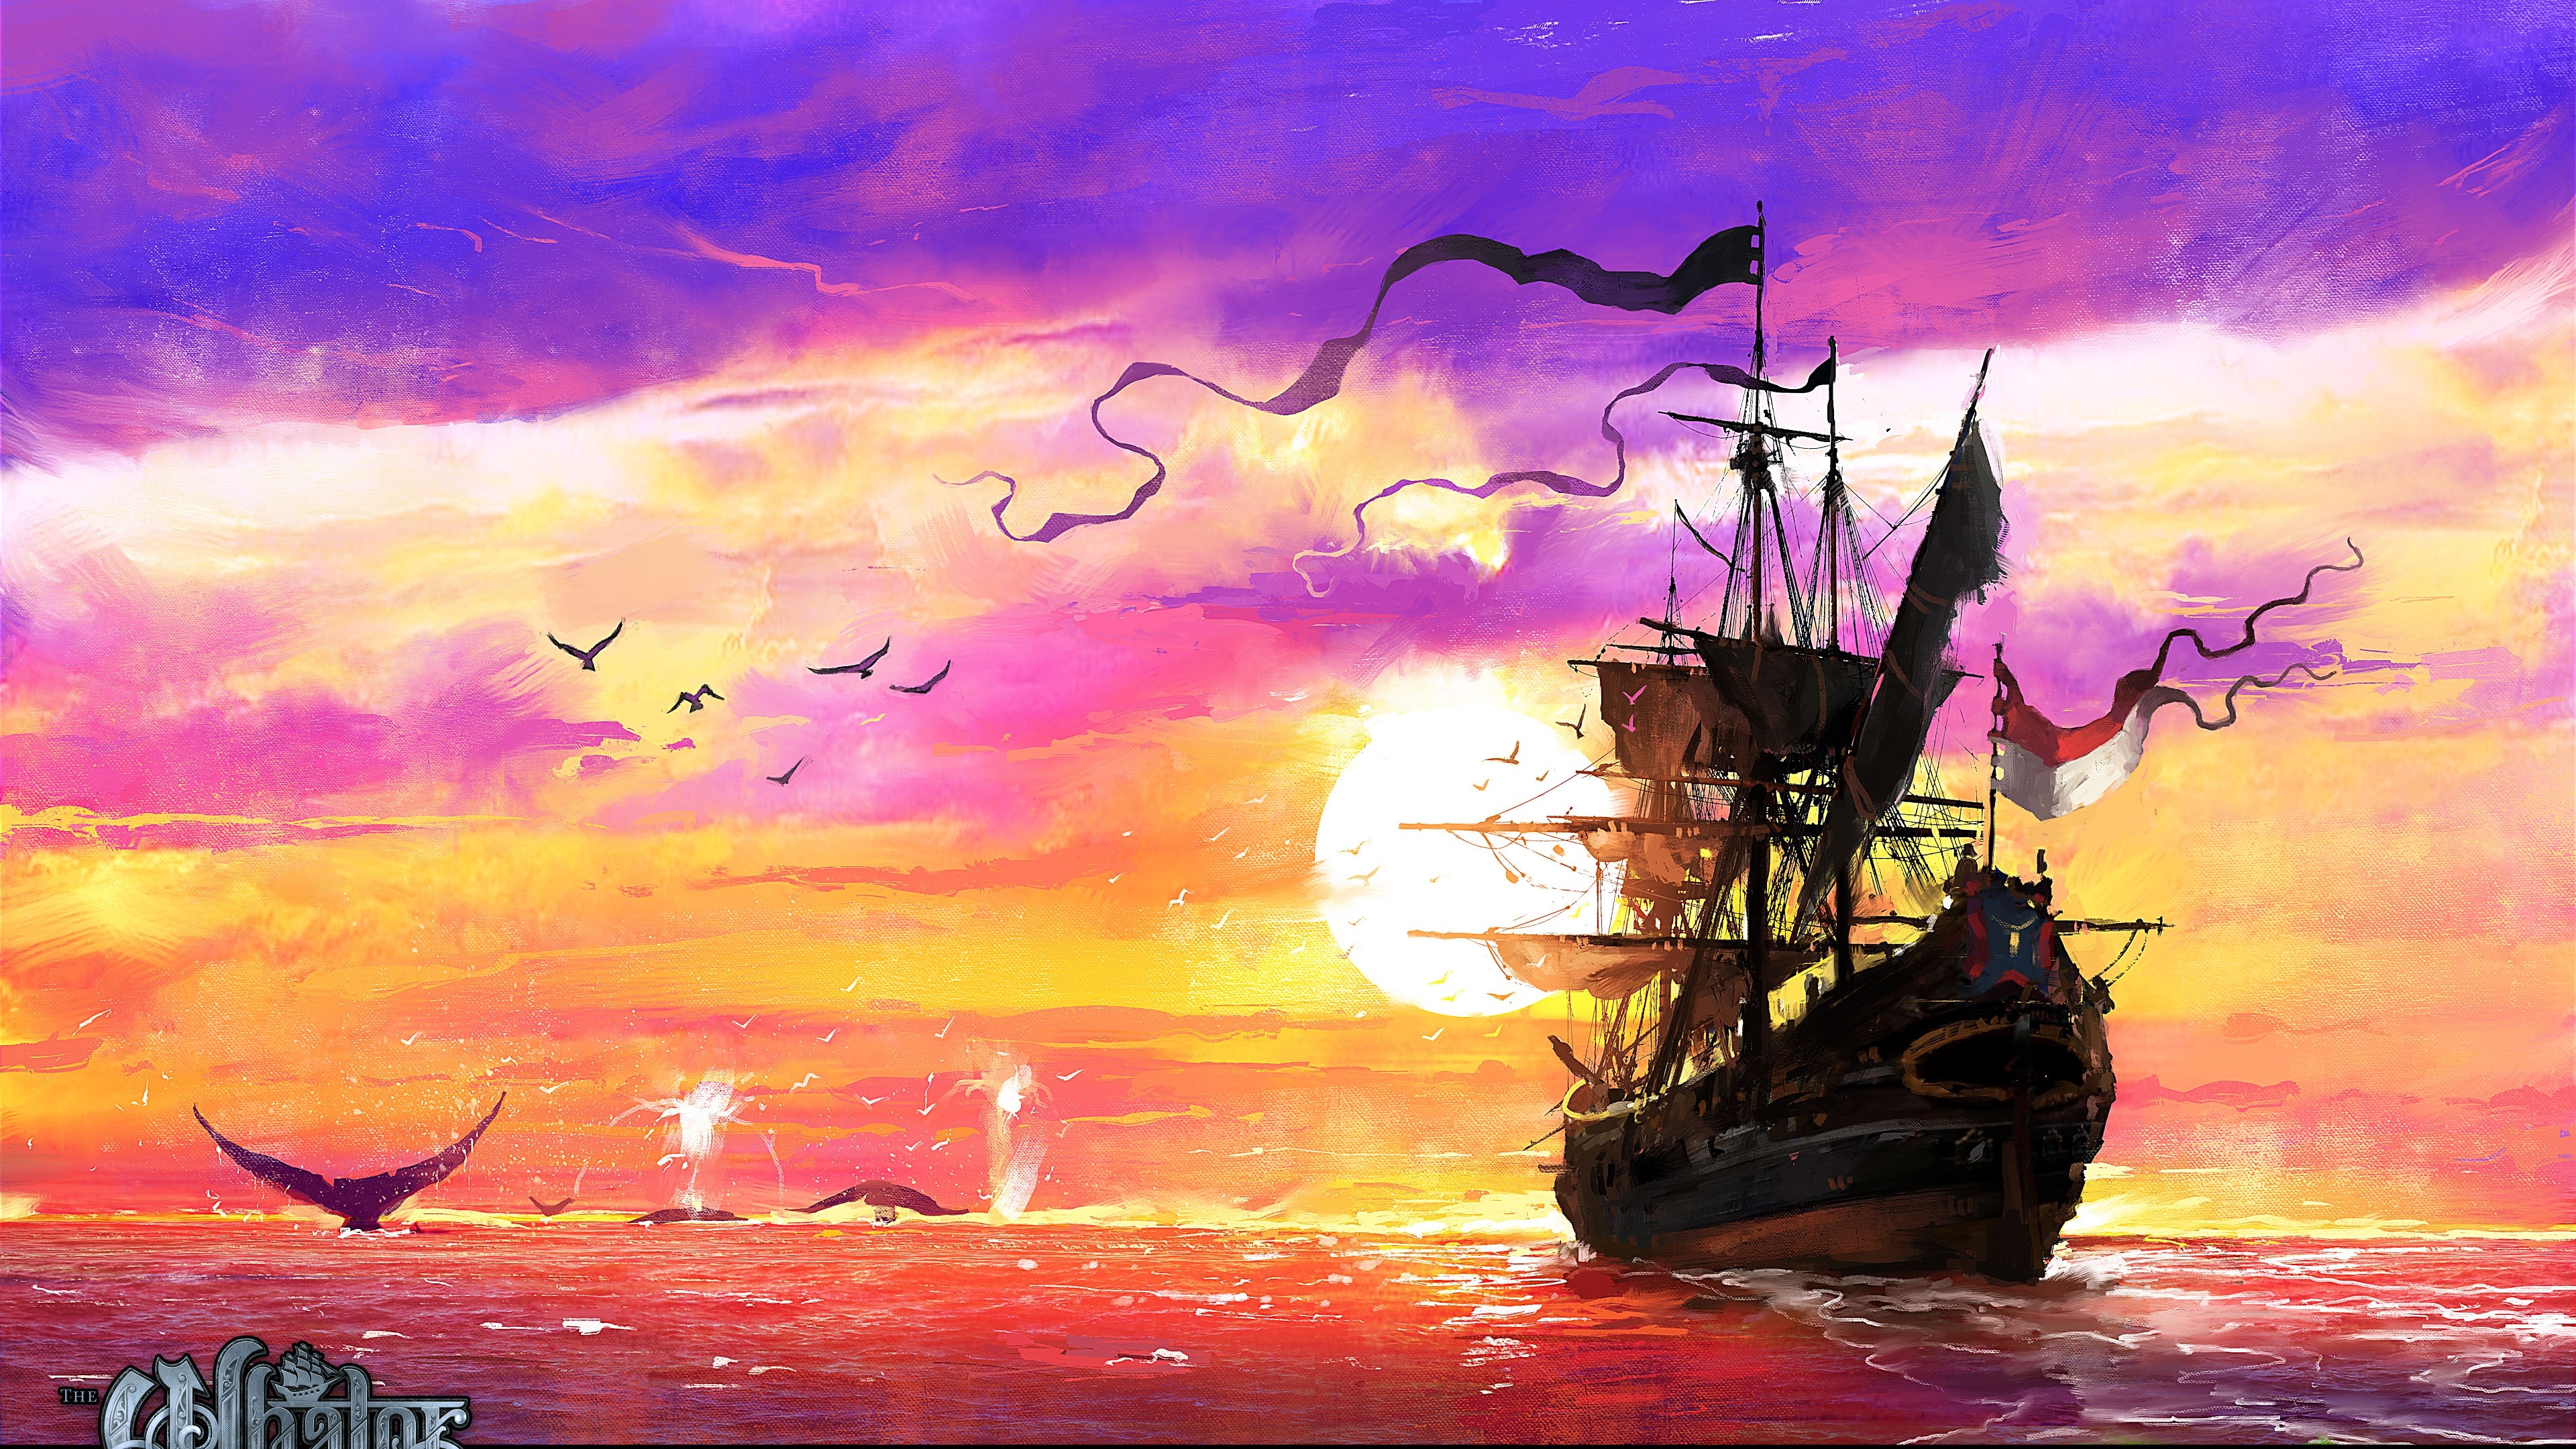 Sailing Ship Art Wallpaper, HD Artist 4K Wallpapers, Images, Photos and